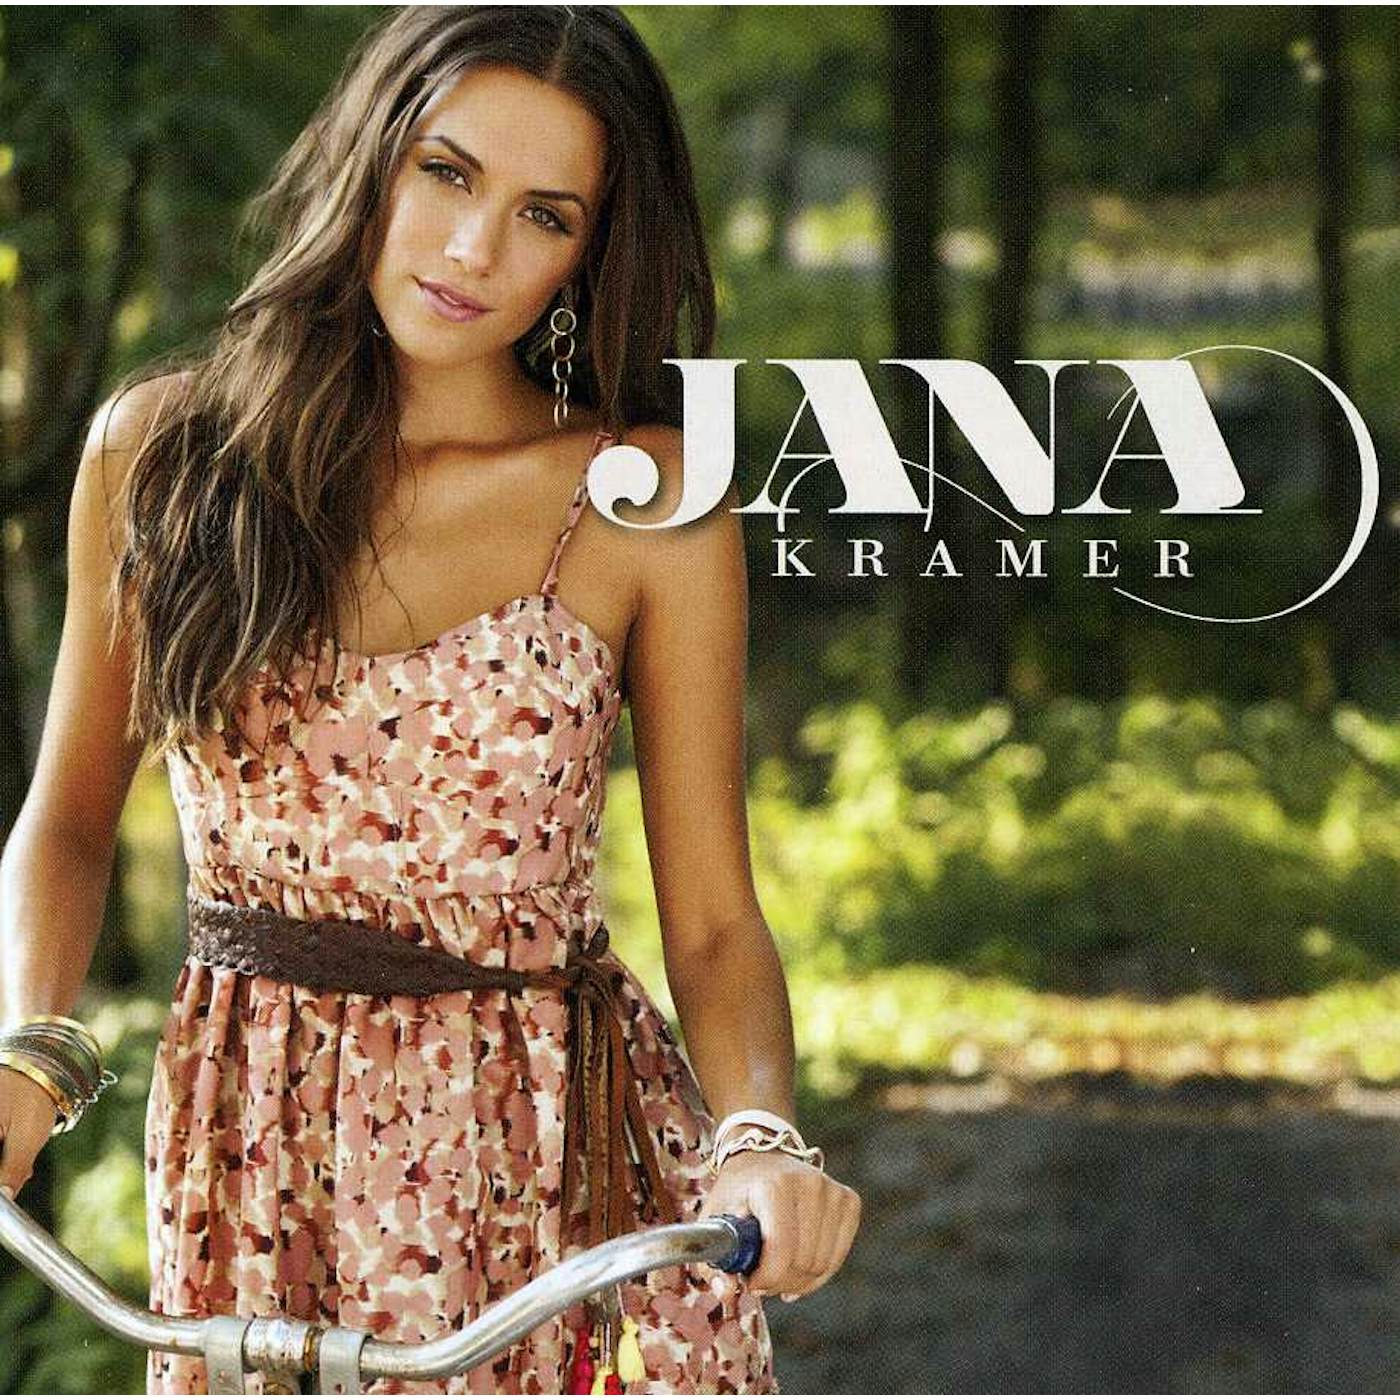 JANA KRAMER CD